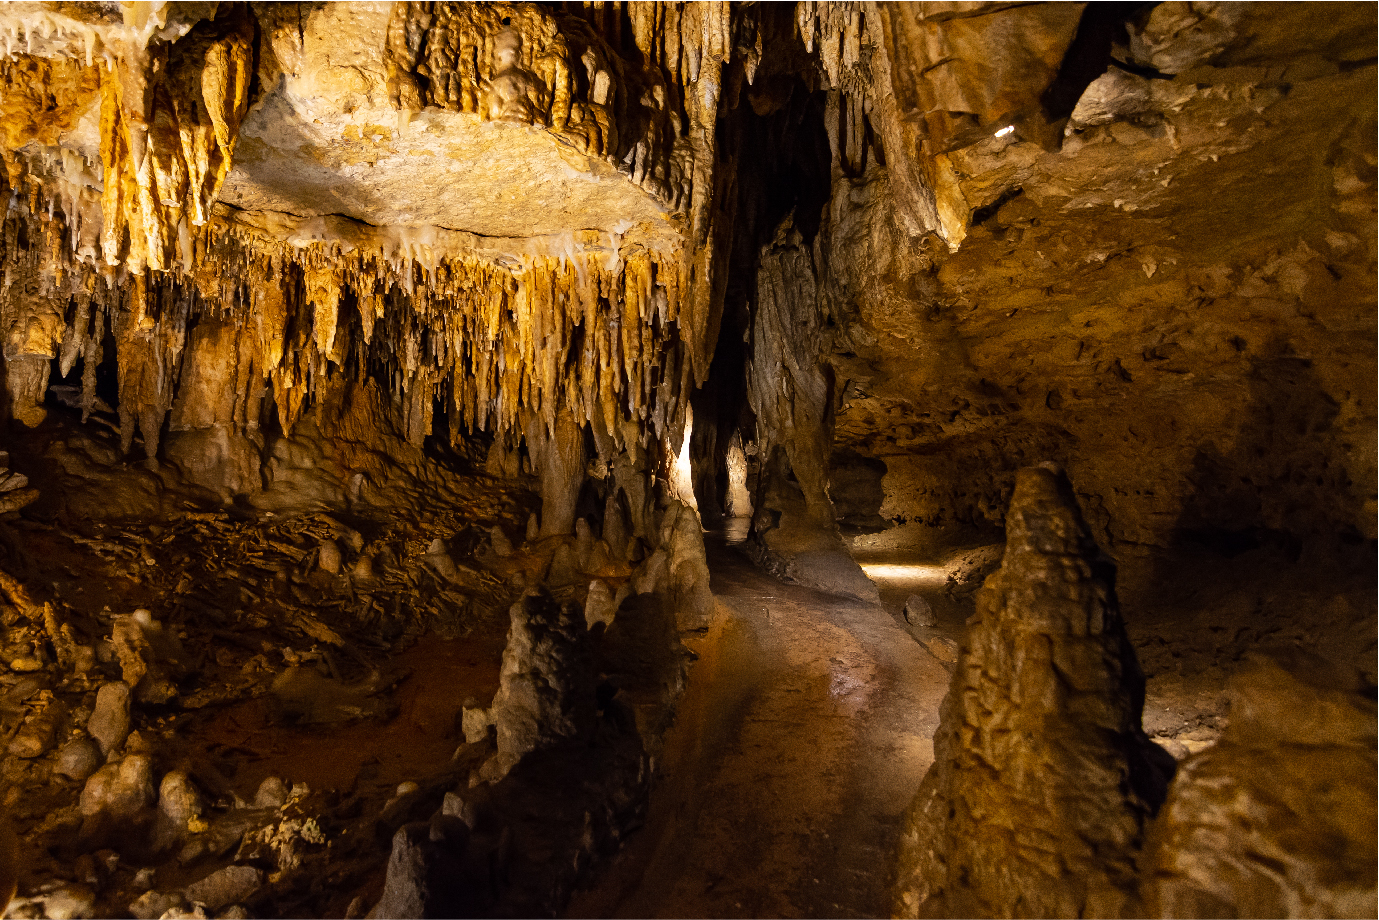 Scene inside a cave